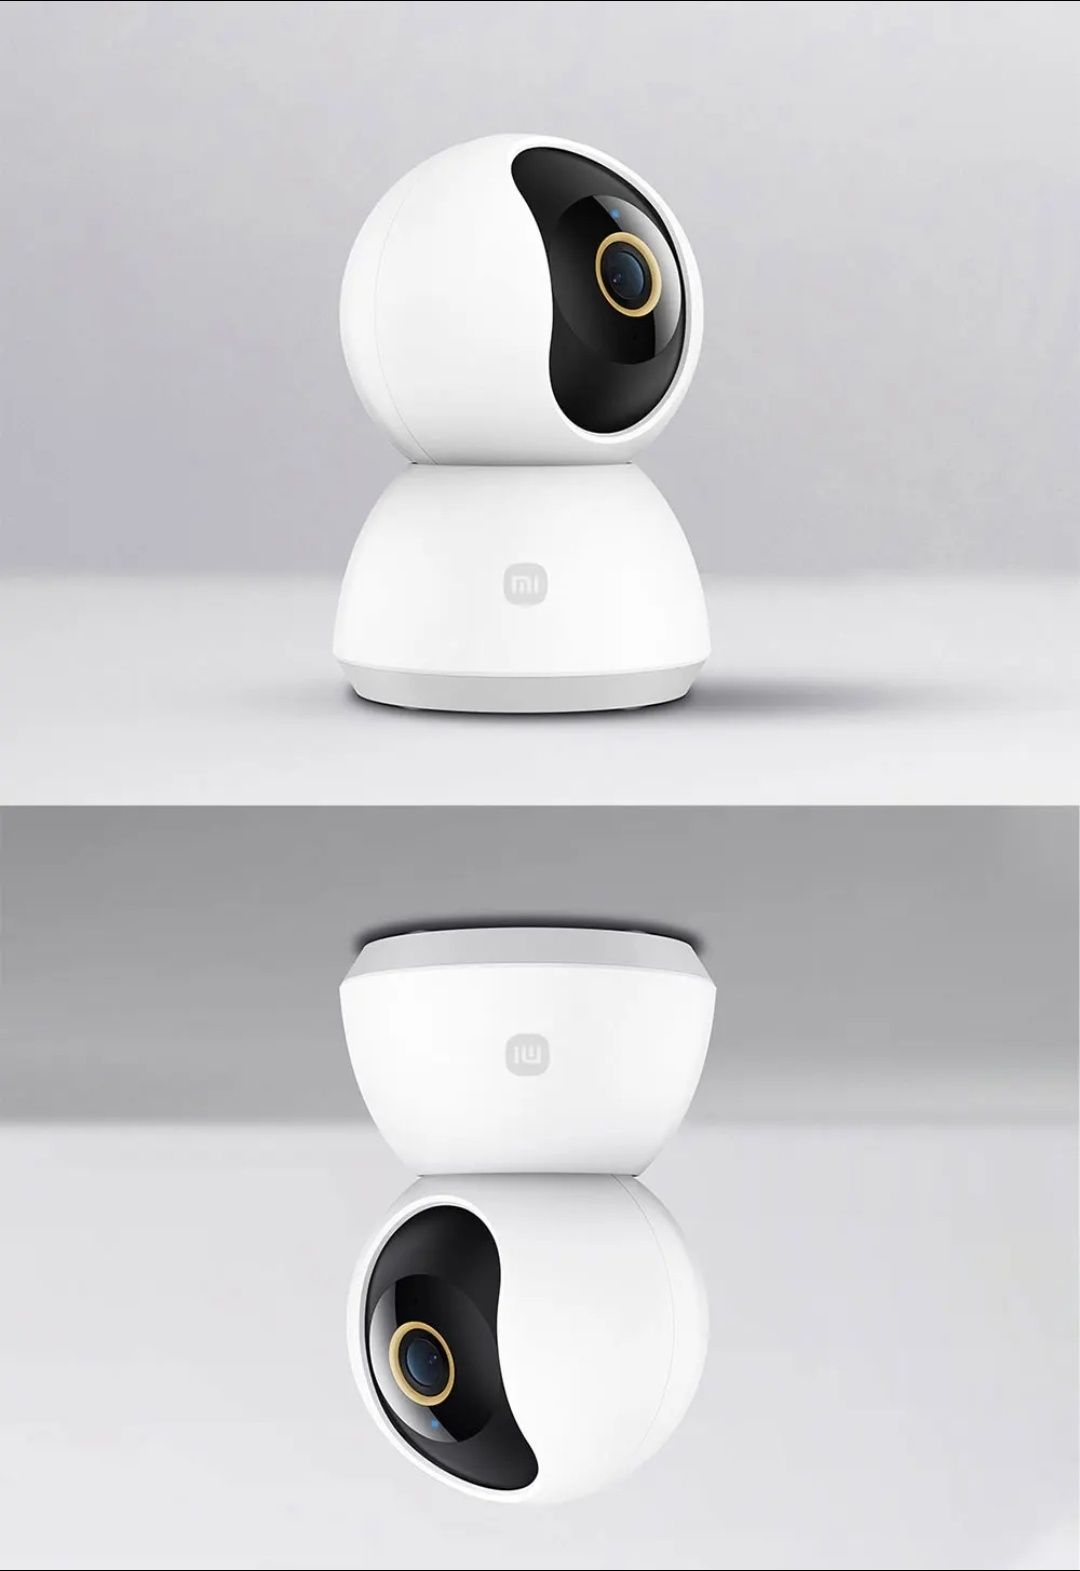 Камера Mi 360° Home Security Camera 2K Xiaomi+ карта ALUNX 64 GB